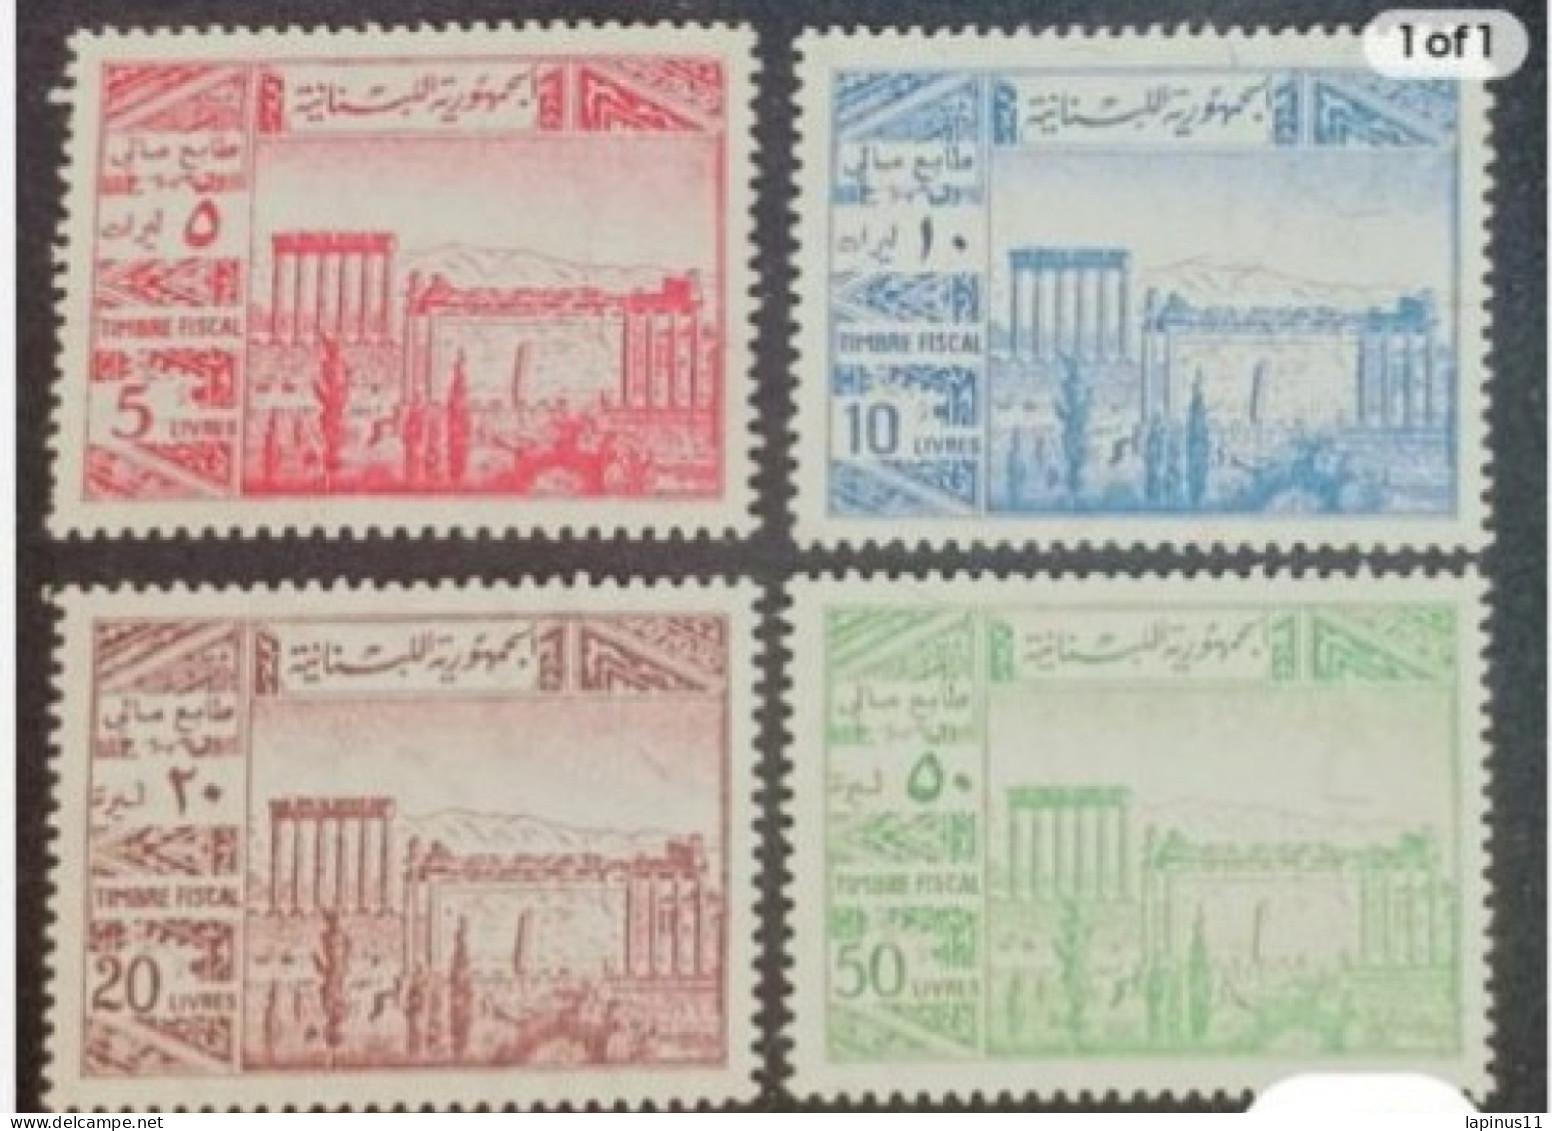 LIBAN LEBANON FISCAL REVENUE STAMPS 1974 RARE  ANJAR ISSUE FULL SHEET MNH 5102050 LIVRES - Liban